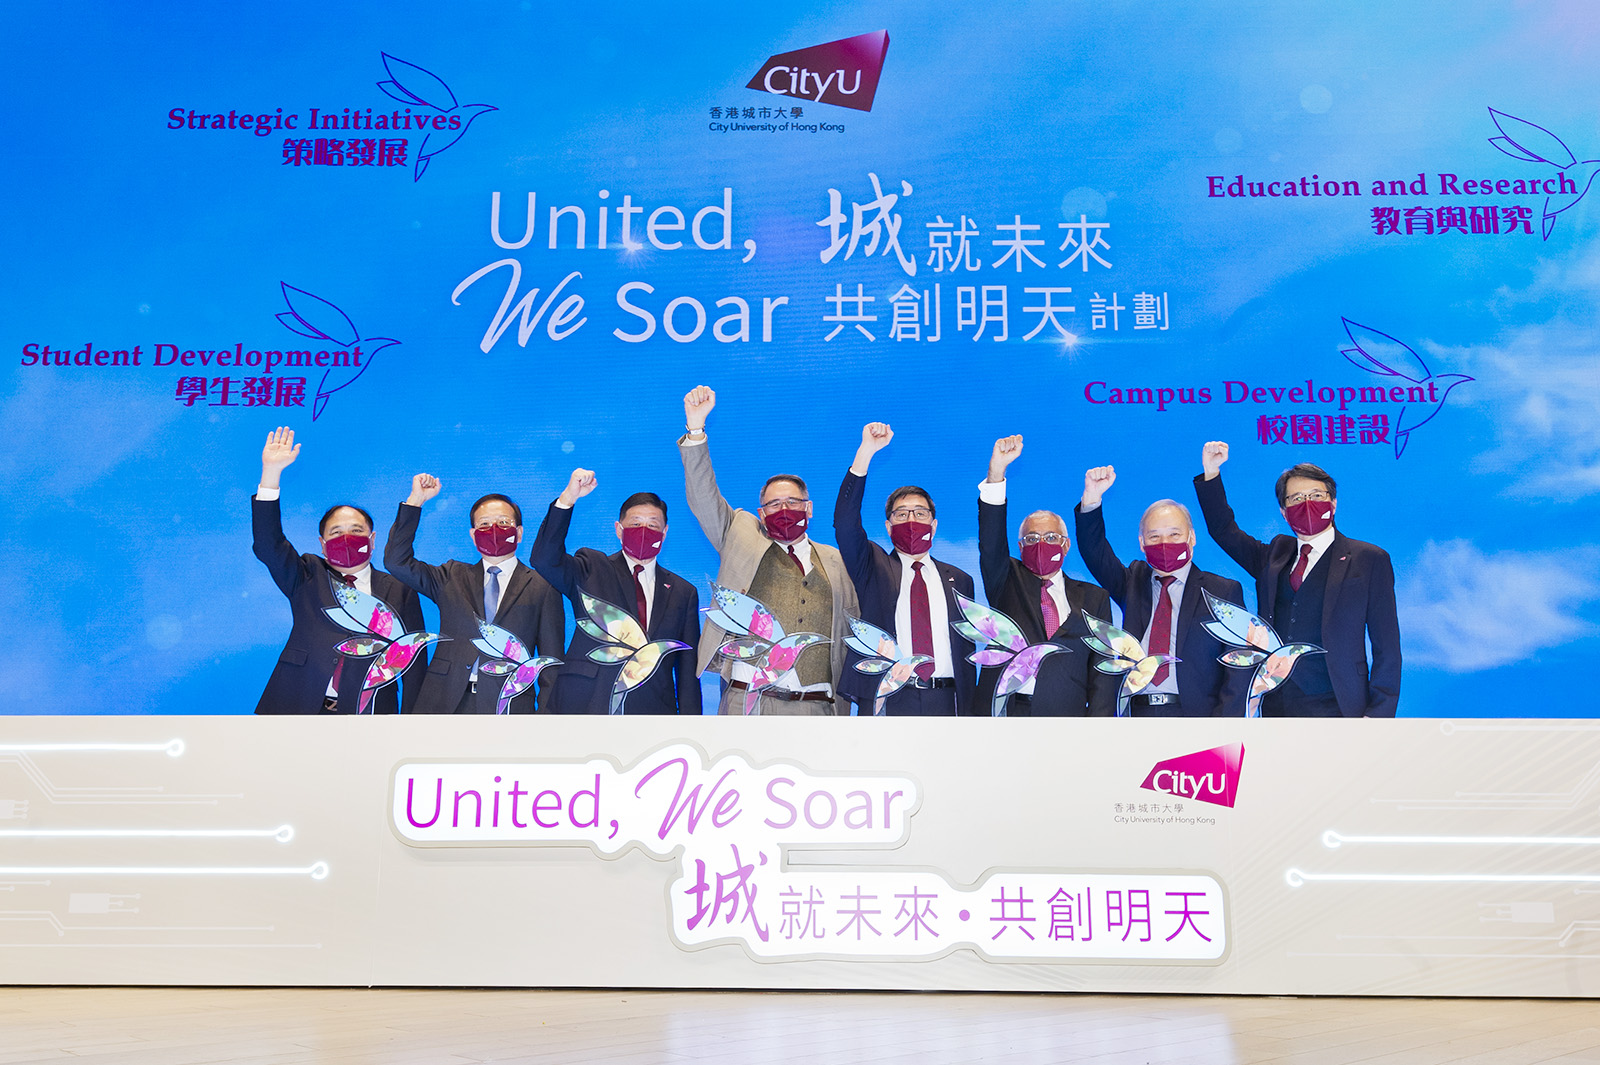 “United, We Soar” campaign ushers in new era for CityU